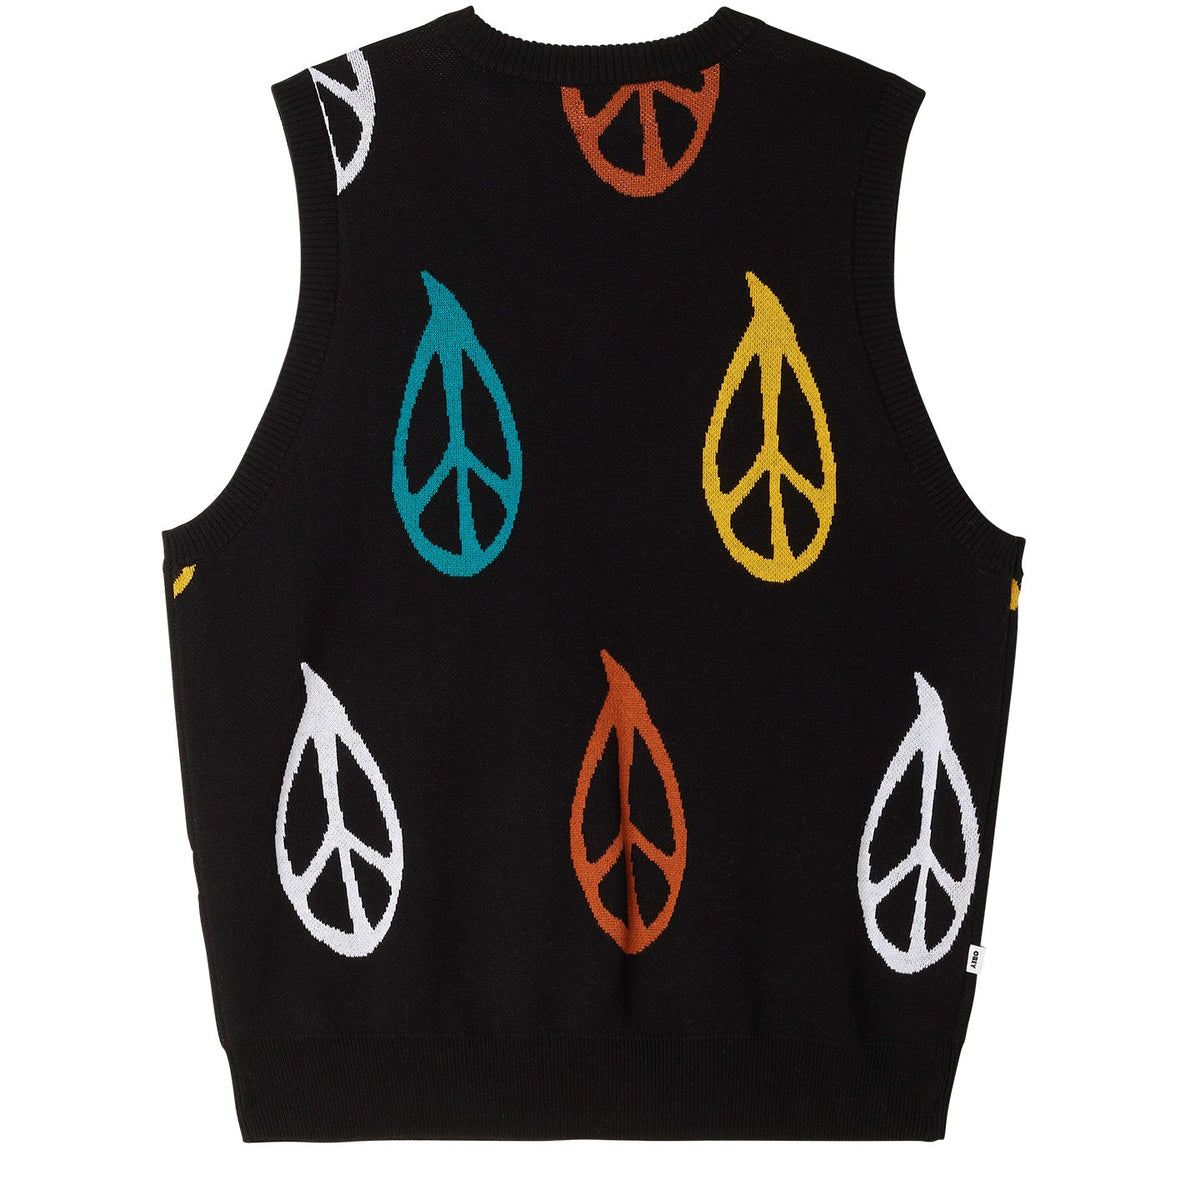 Obey Peace Sweater Vest